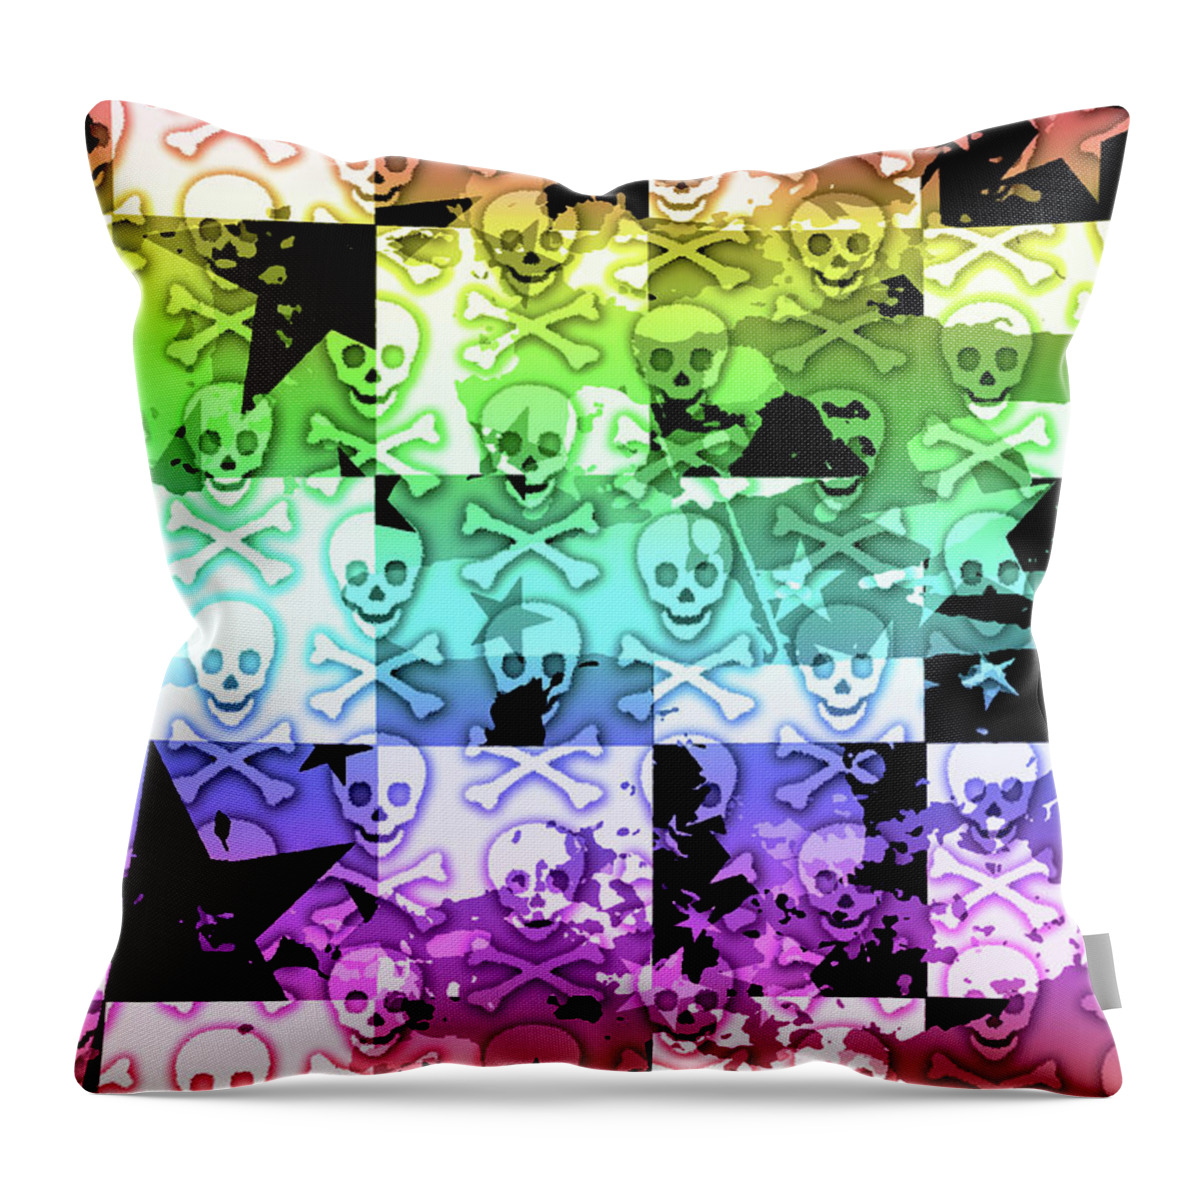 Rainbow Throw Pillow featuring the digital art Rainbow Checker Skull Splatter by Roseanne Jones